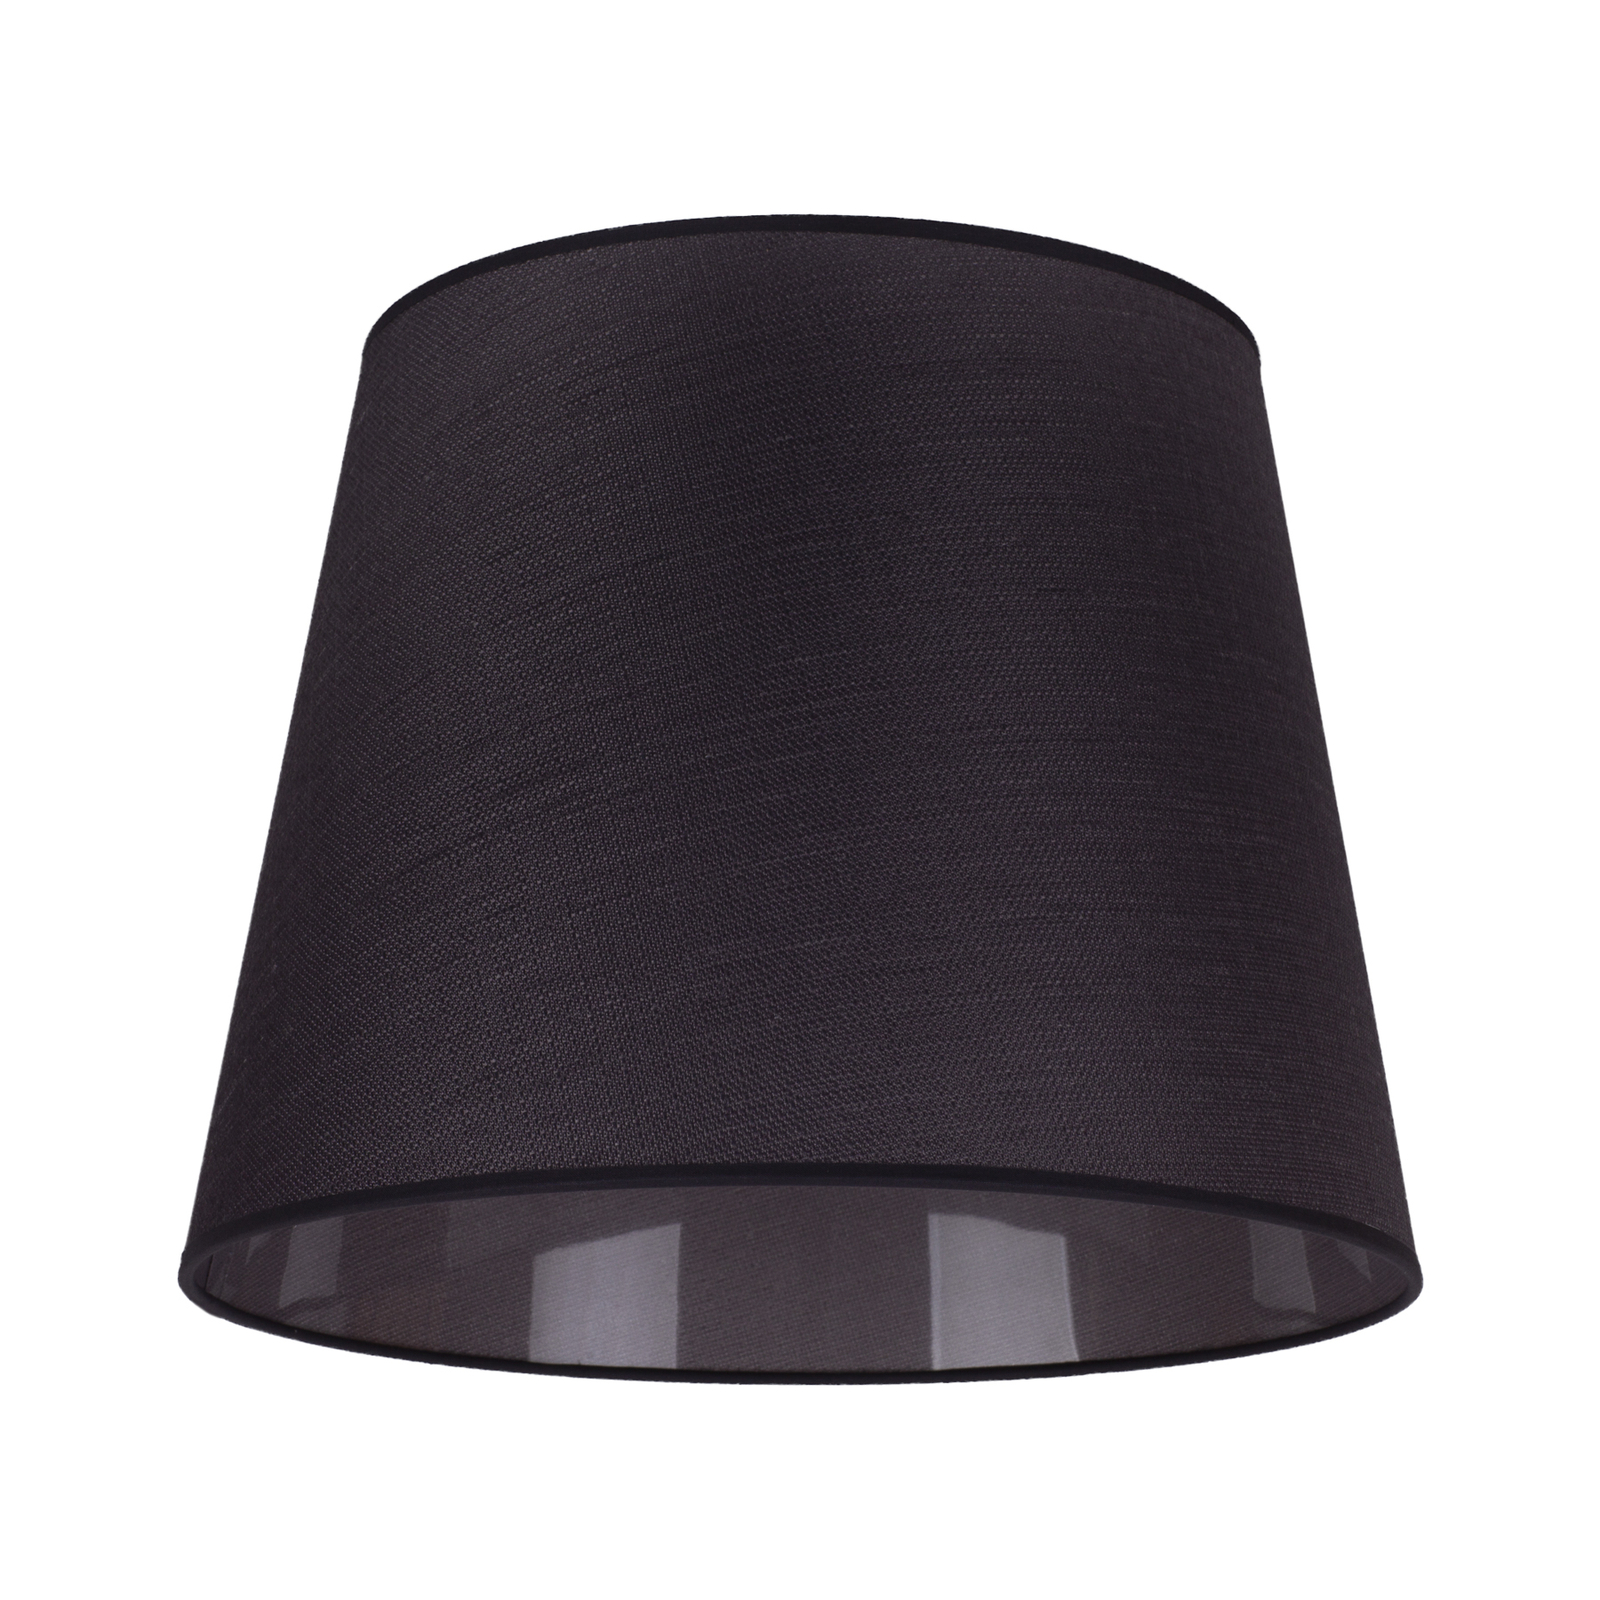 Classic L lampshade for floor lamps, graphite